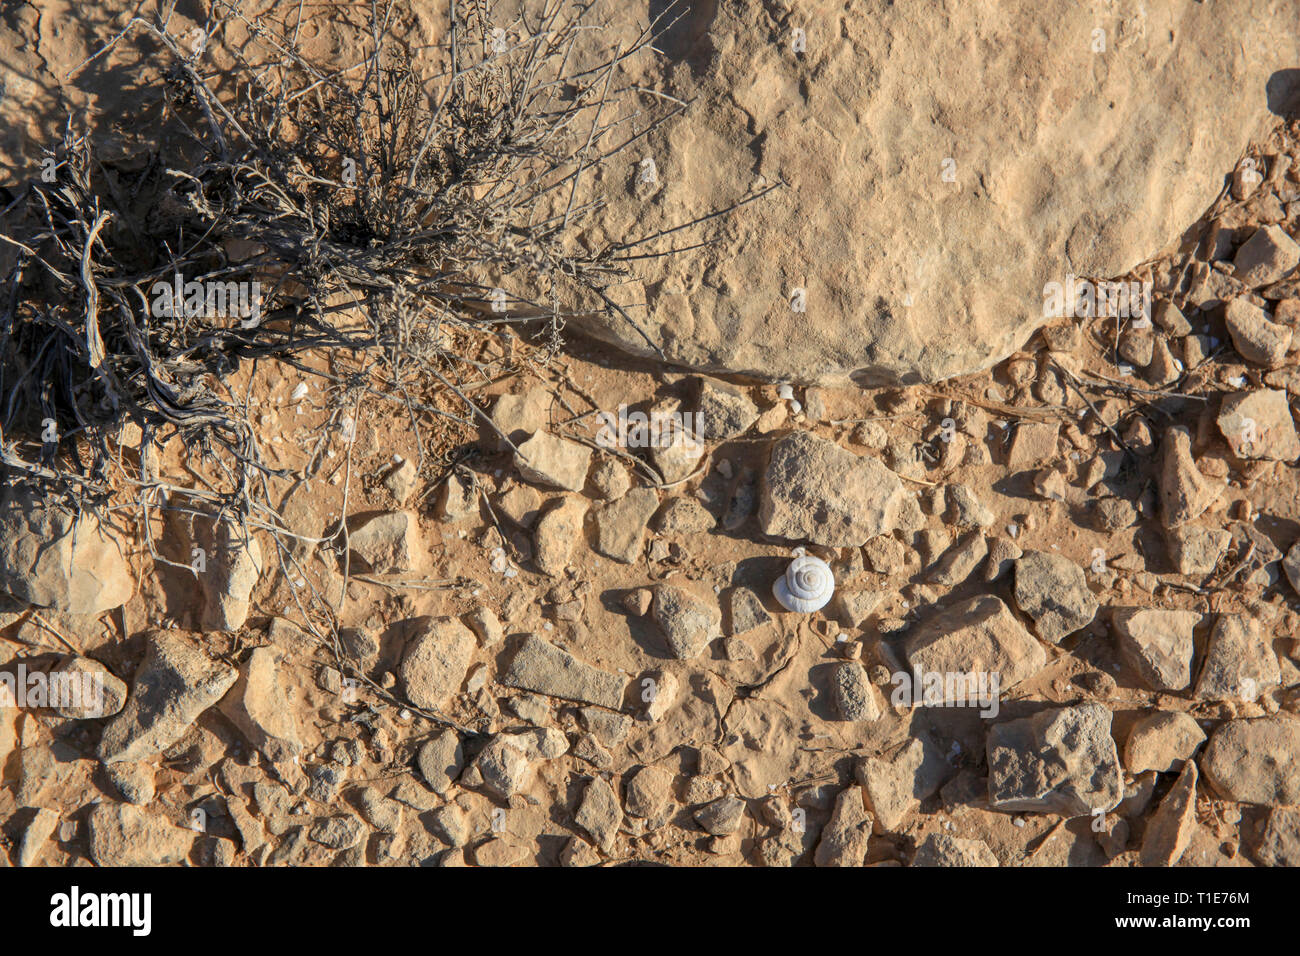 Israel, Negev desert plains, empty snail shells Stock Photo